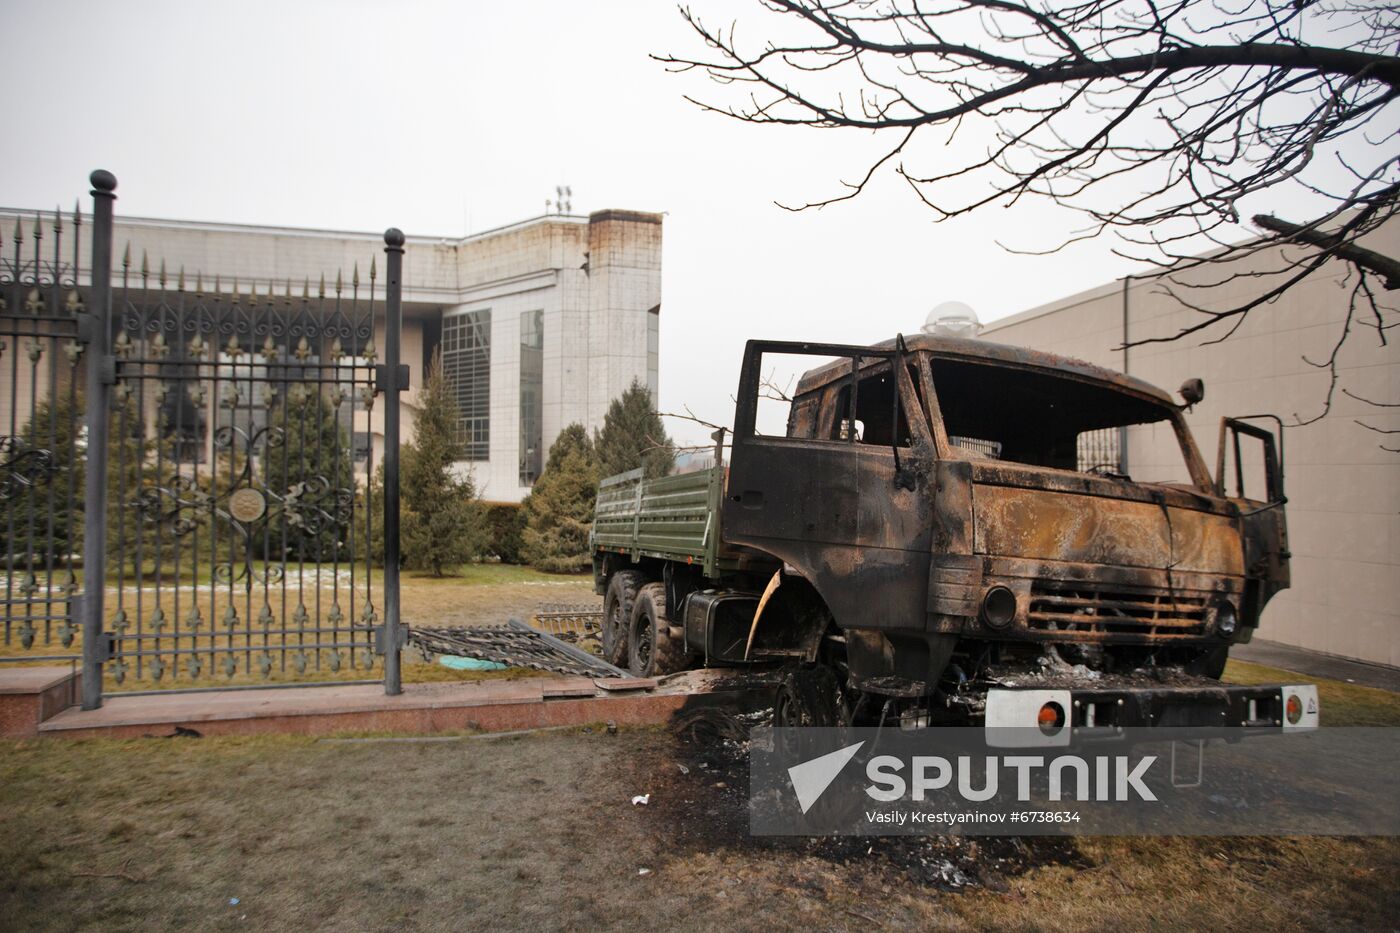 Kazakhstan Protests Aftermath